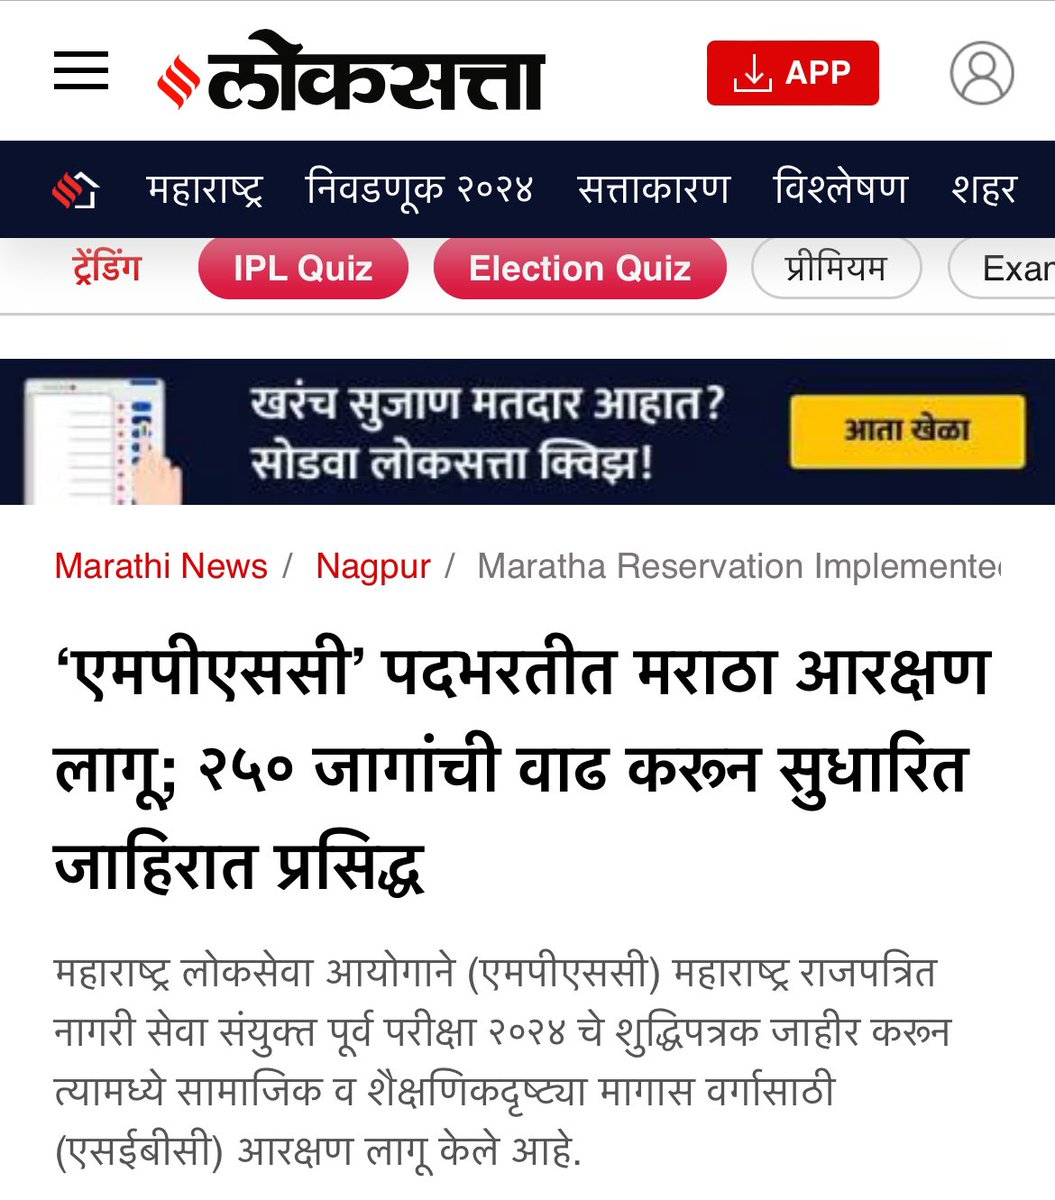 महायुतीने दिलेला शब्द पाळला
मराठा आरक्षण लागू झालं ! ✌🏻🚩

#MarathaReservation #MaharashtraPolitics